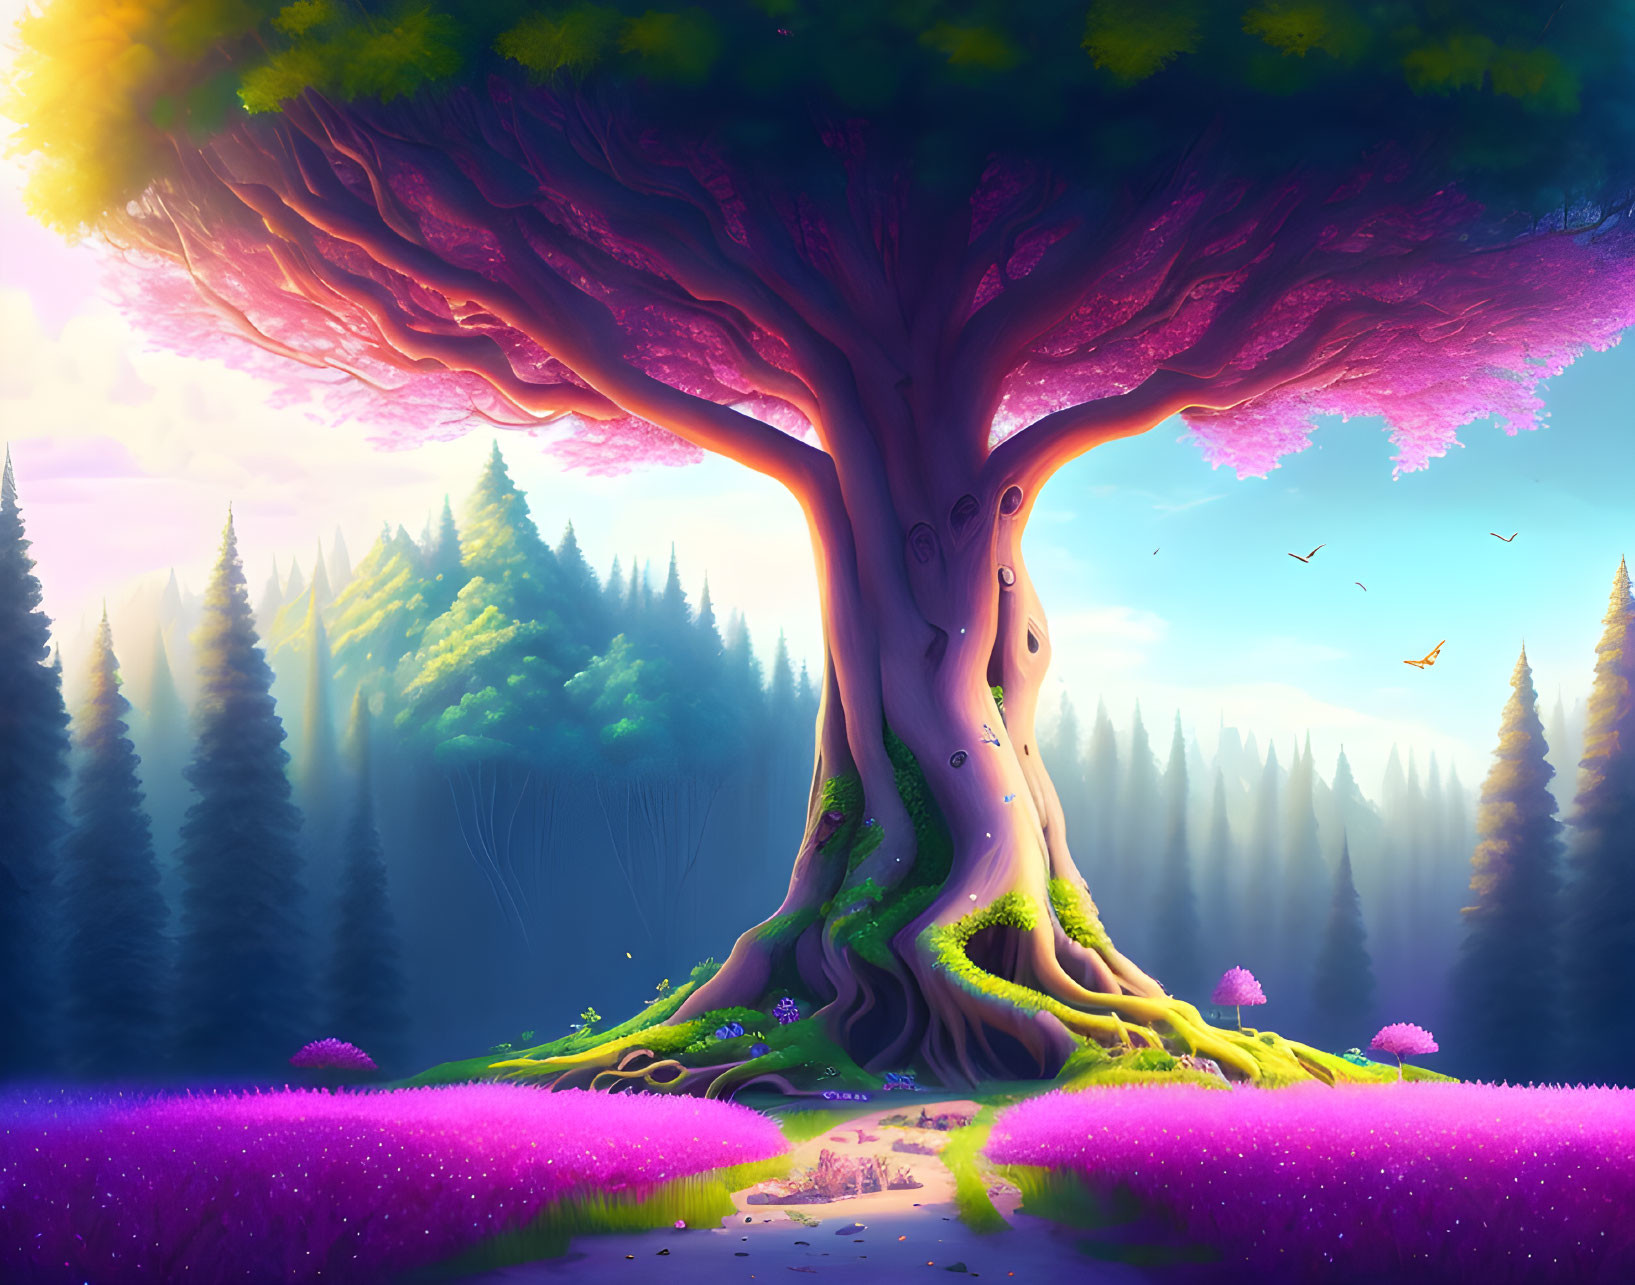 Vibrant fantasy illustration of massive tree in colorful forest landscape